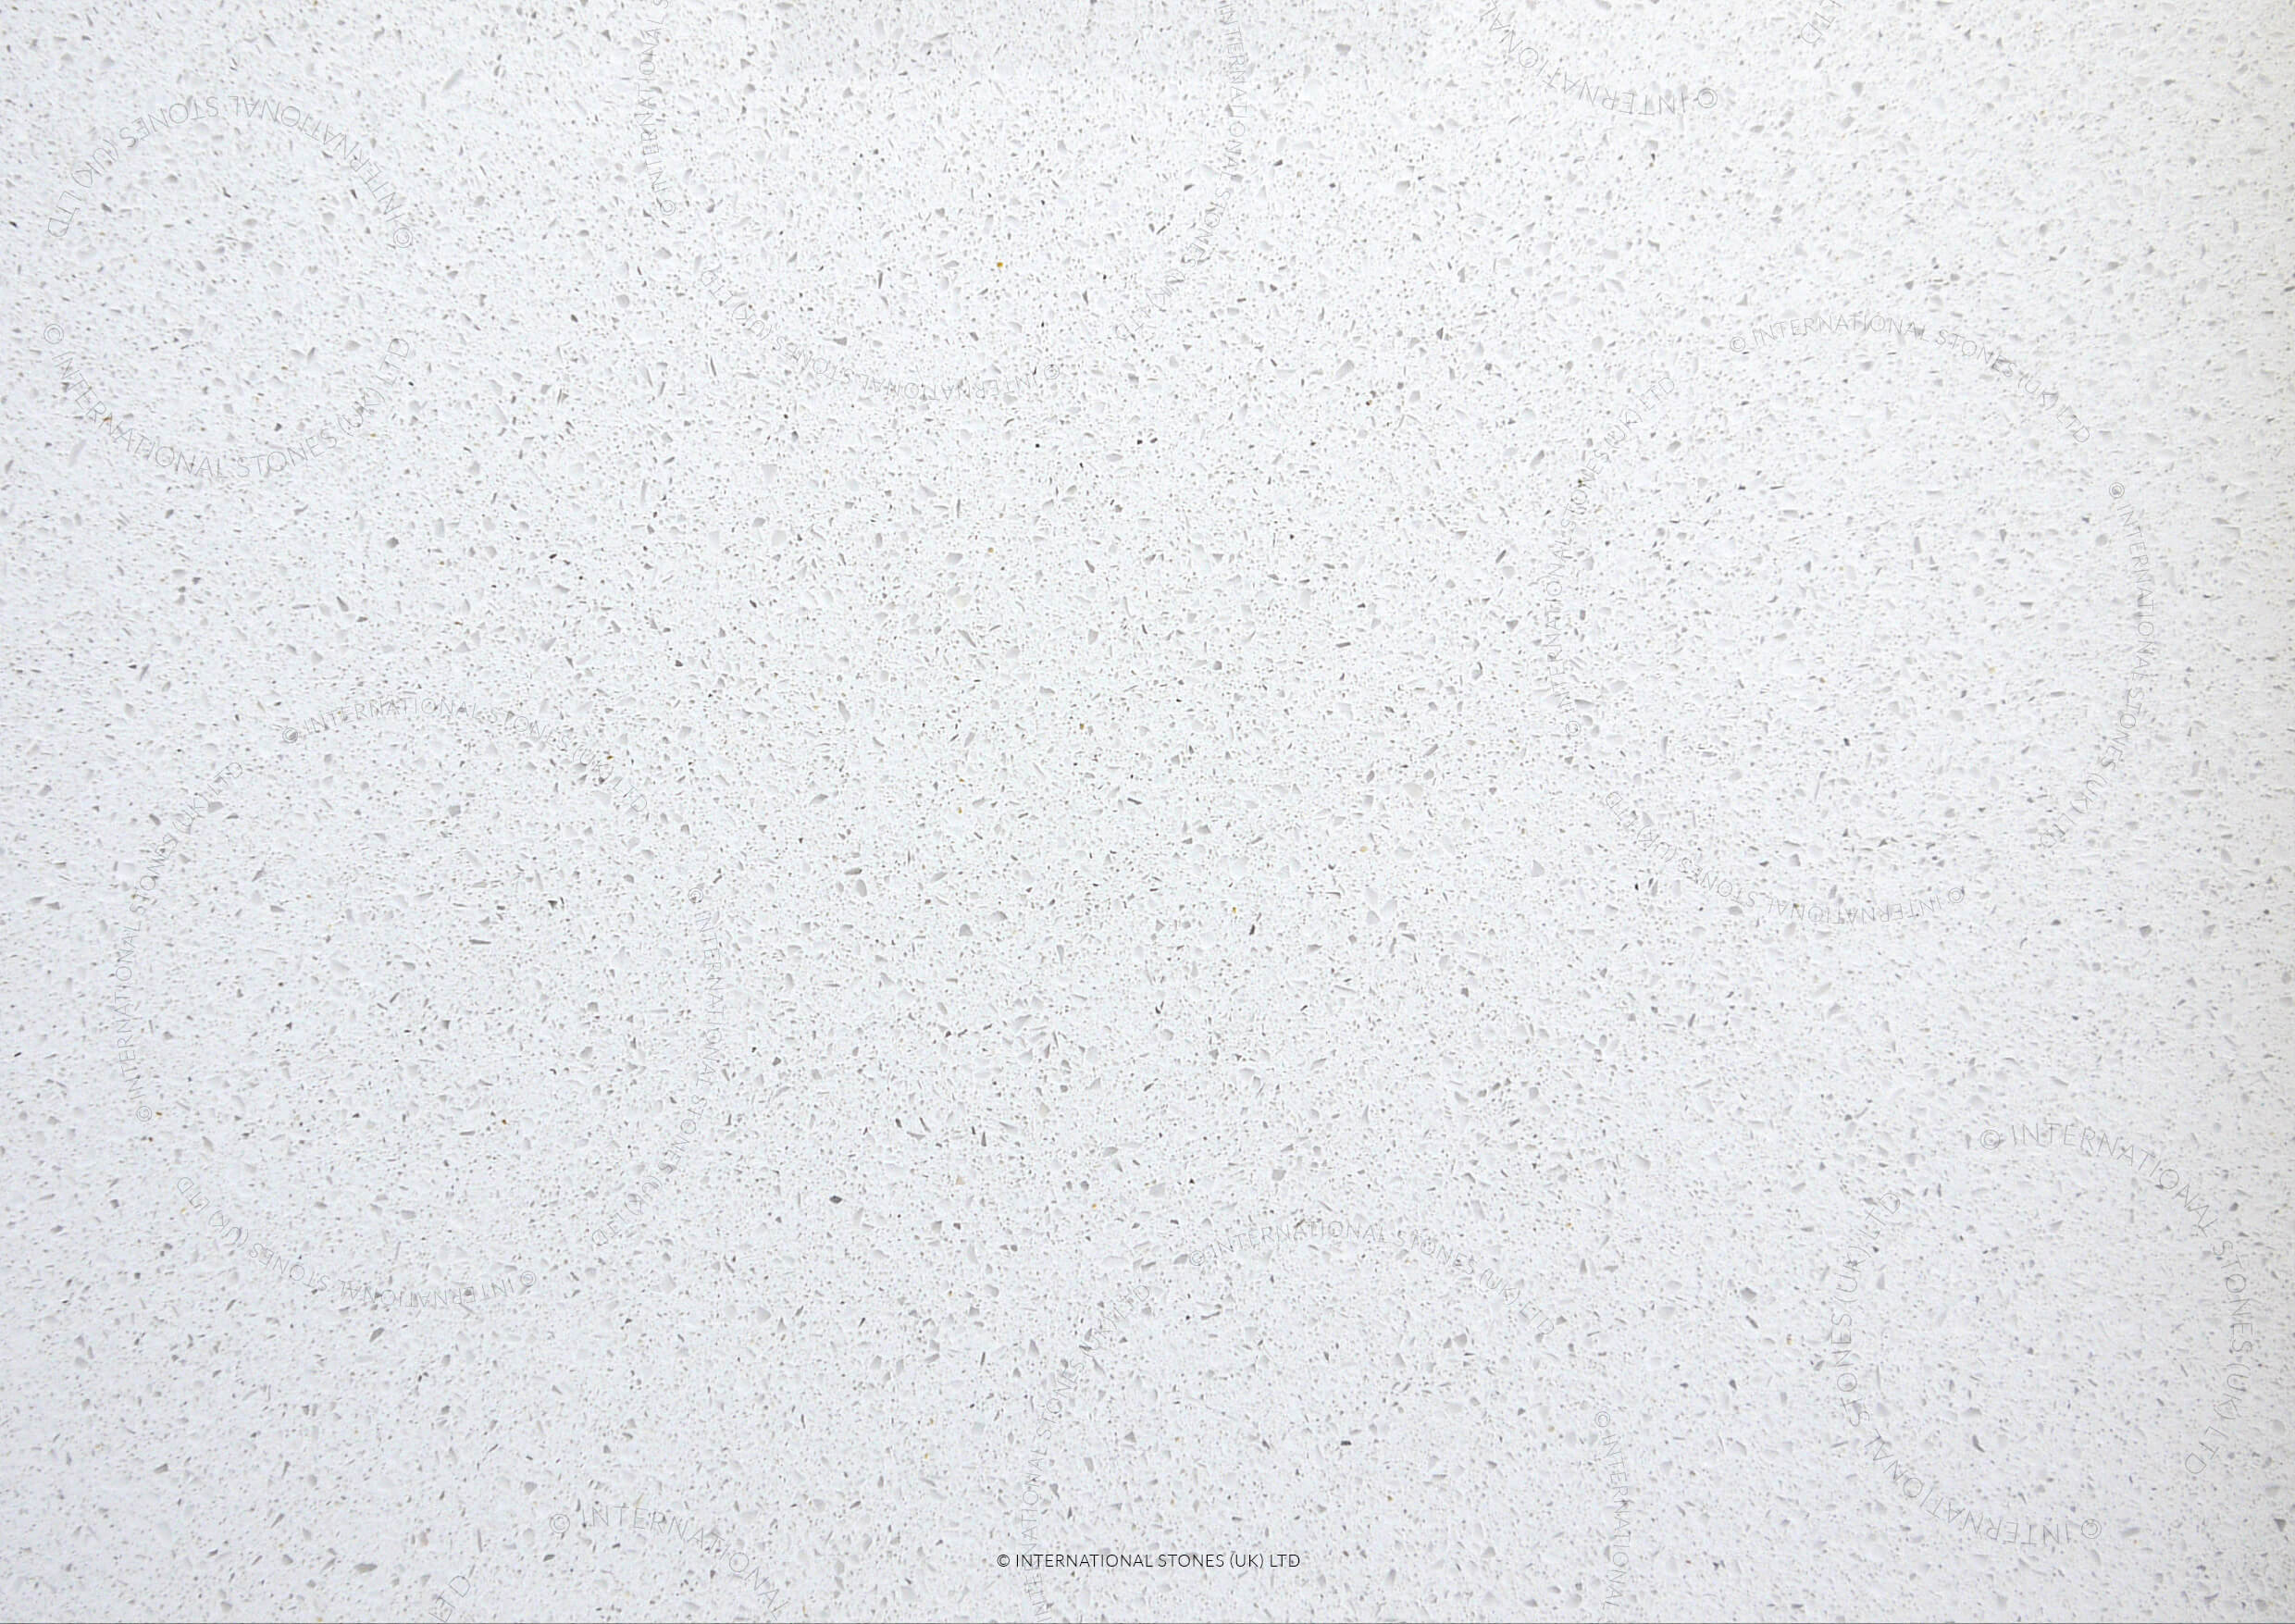 International Stone IQ Blanco Maple - Surrey - Egham